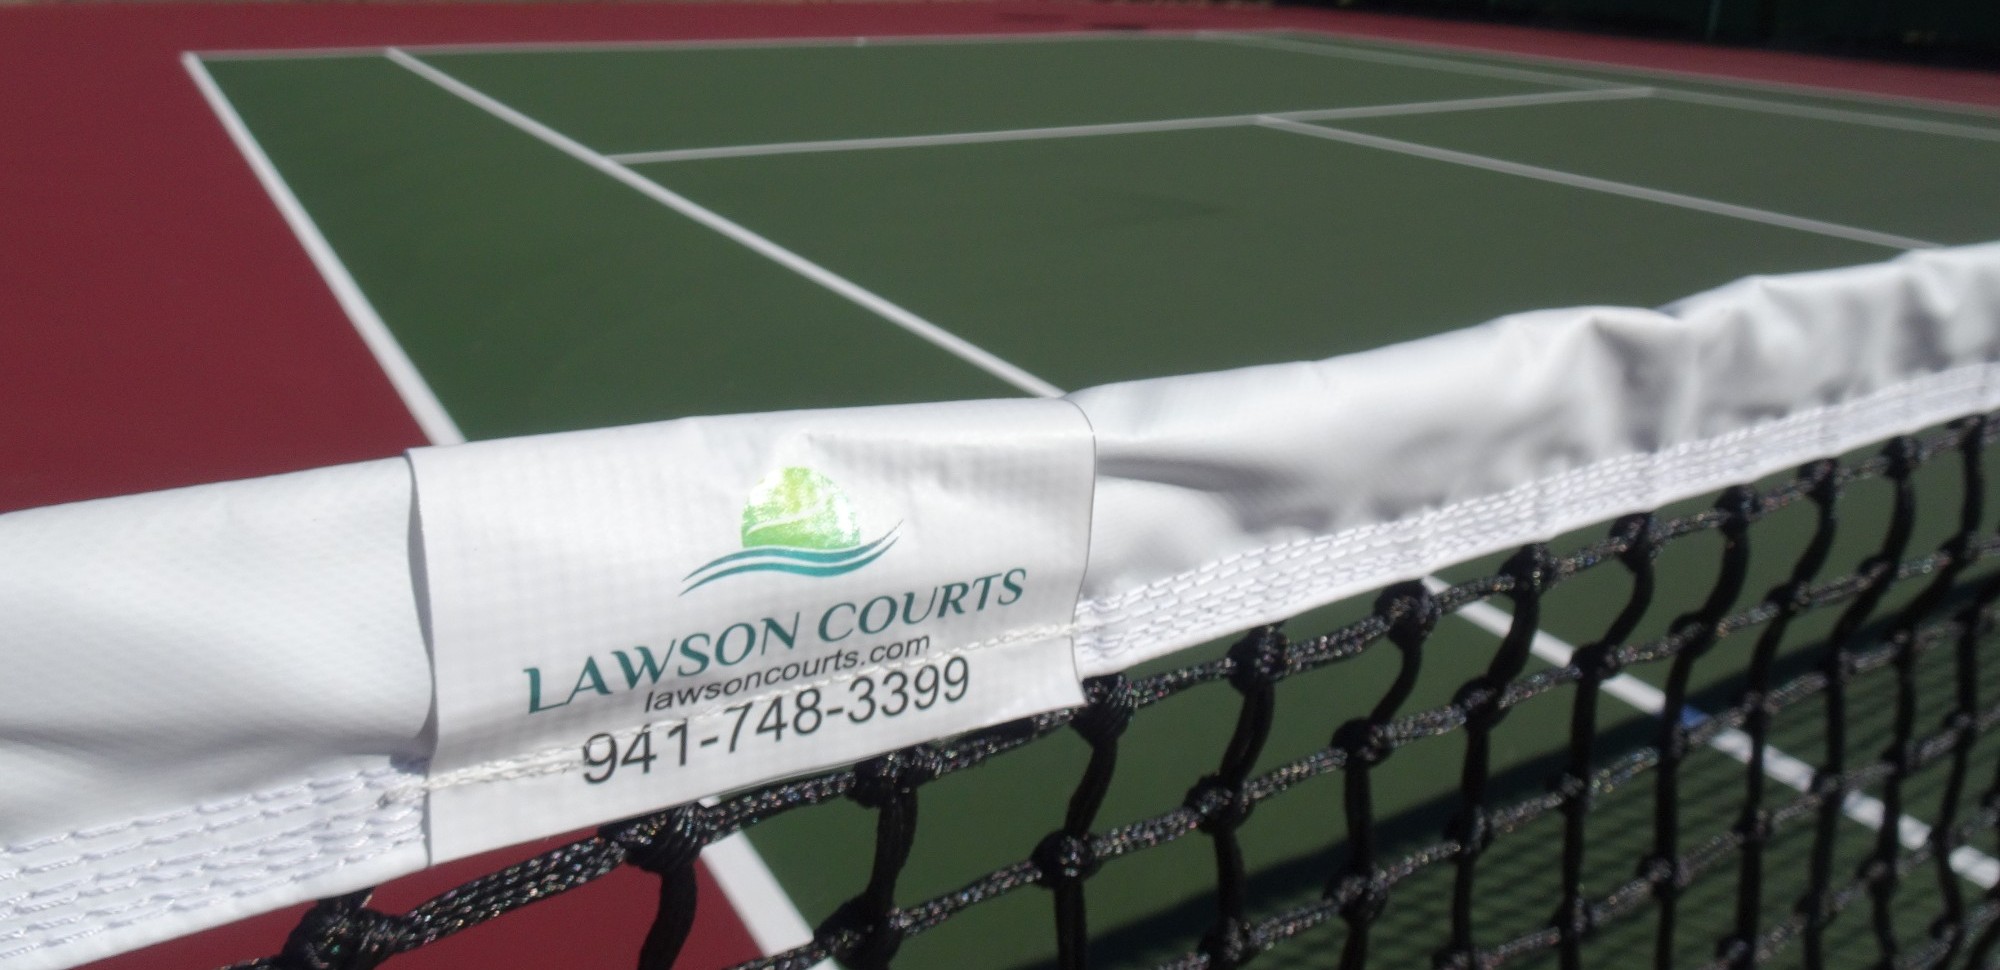 Lawson Courts